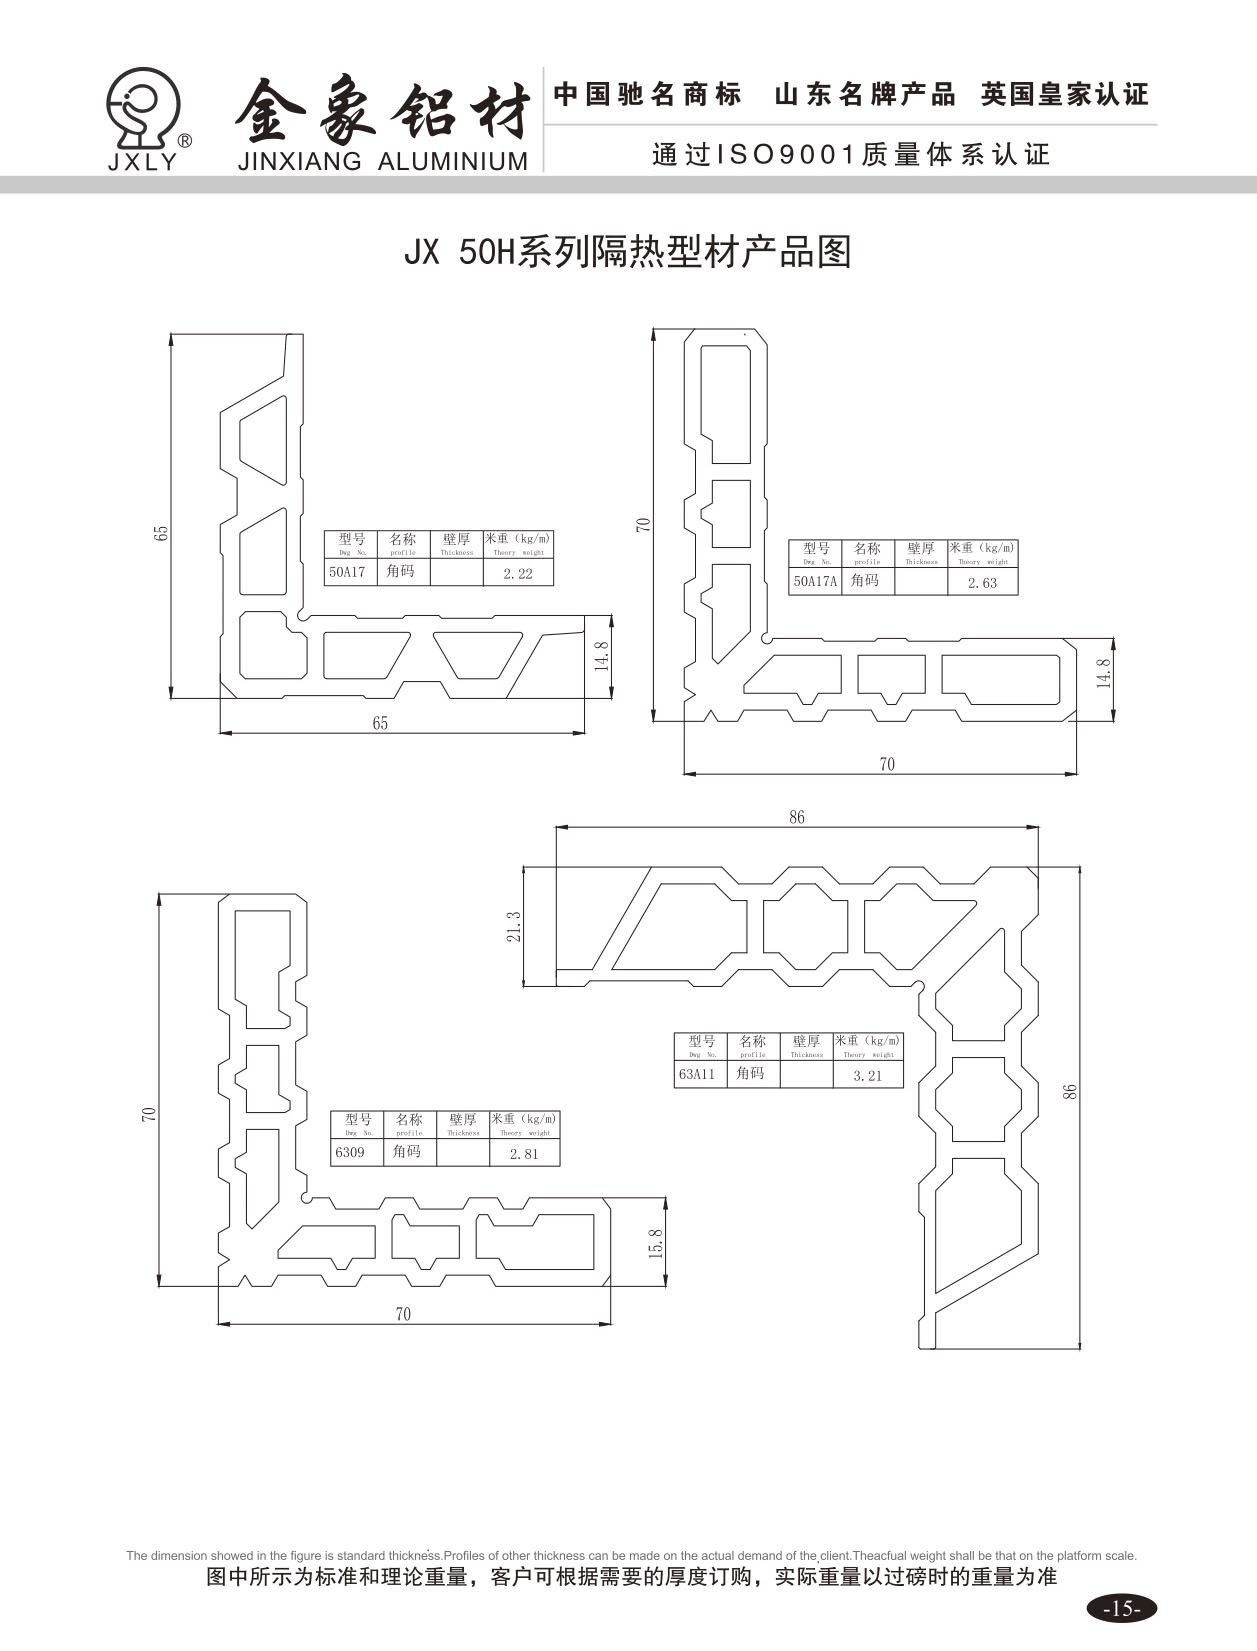 Jx50H系列隔热型材产品图